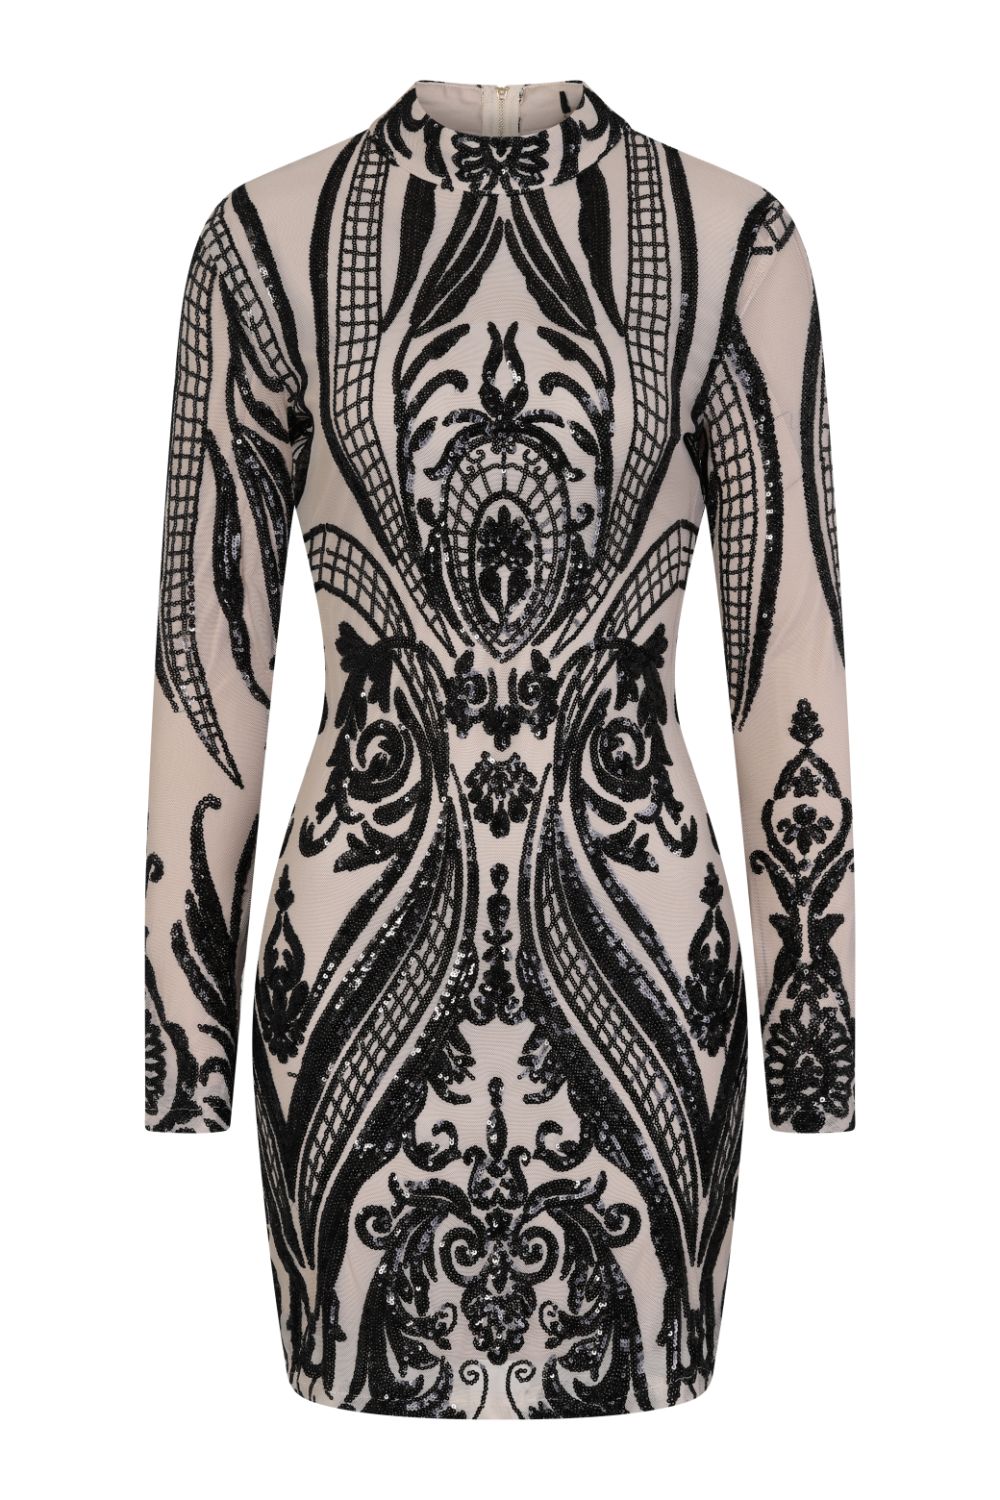 Vixen Black Nude Tribal Illusion Sequin Bodycon Dress